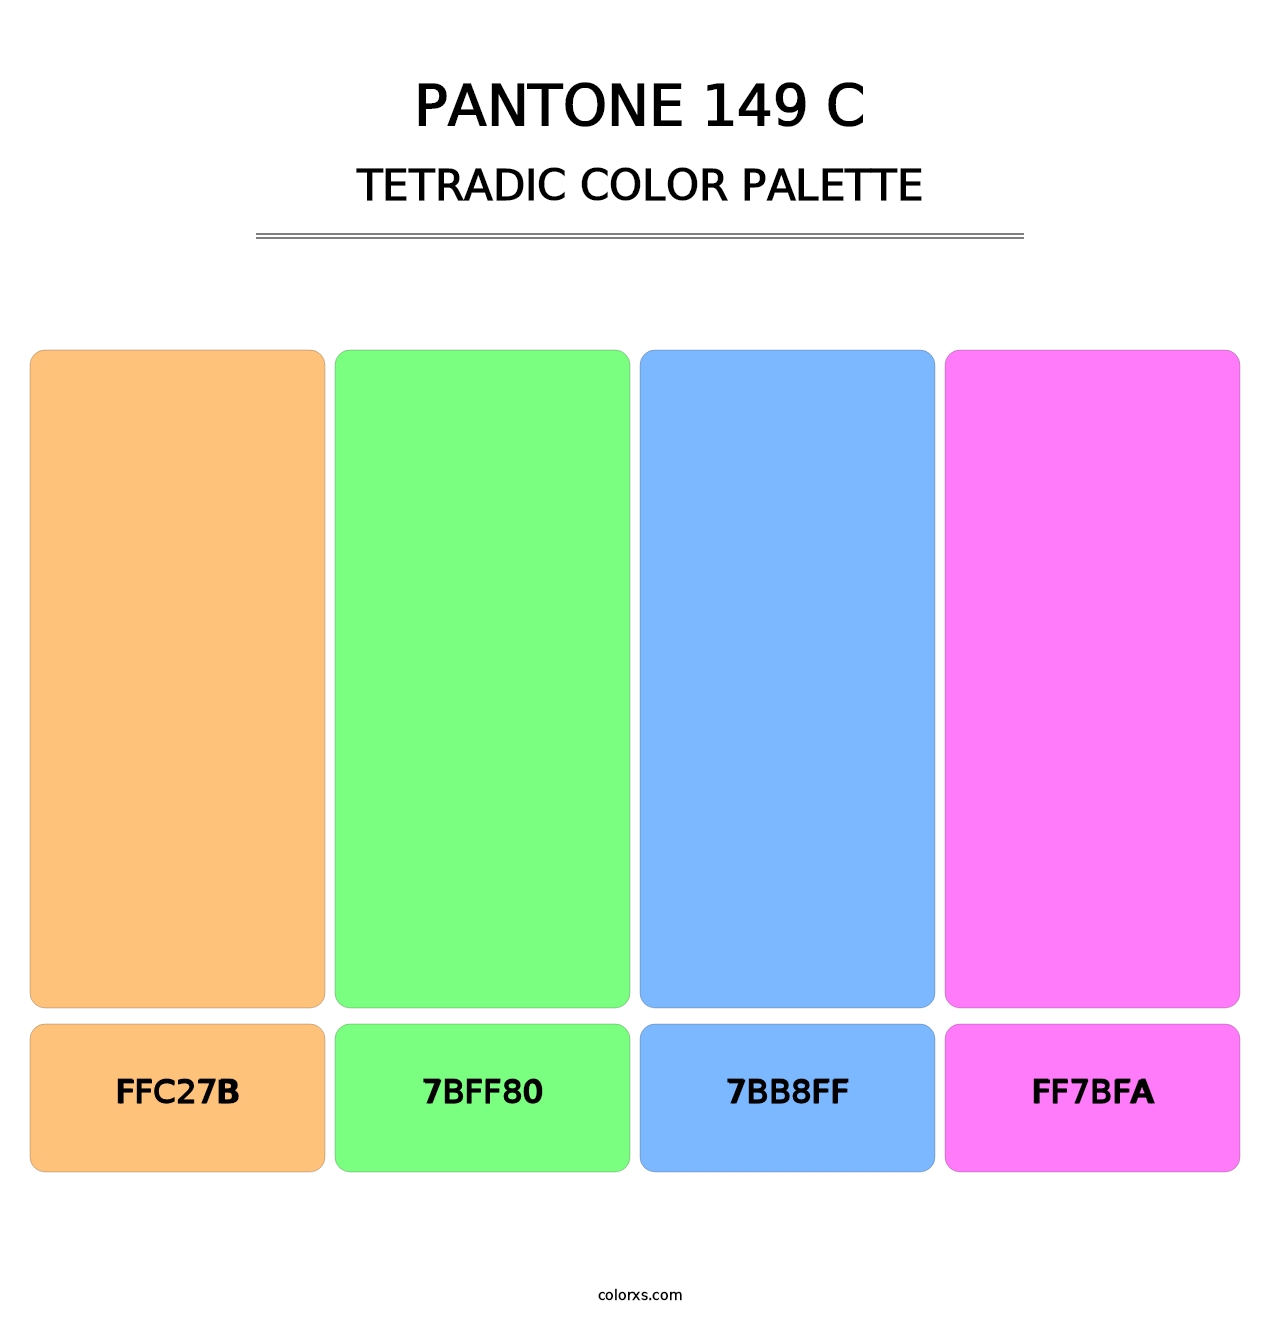 PANTONE 149 C - Tetradic Color Palette